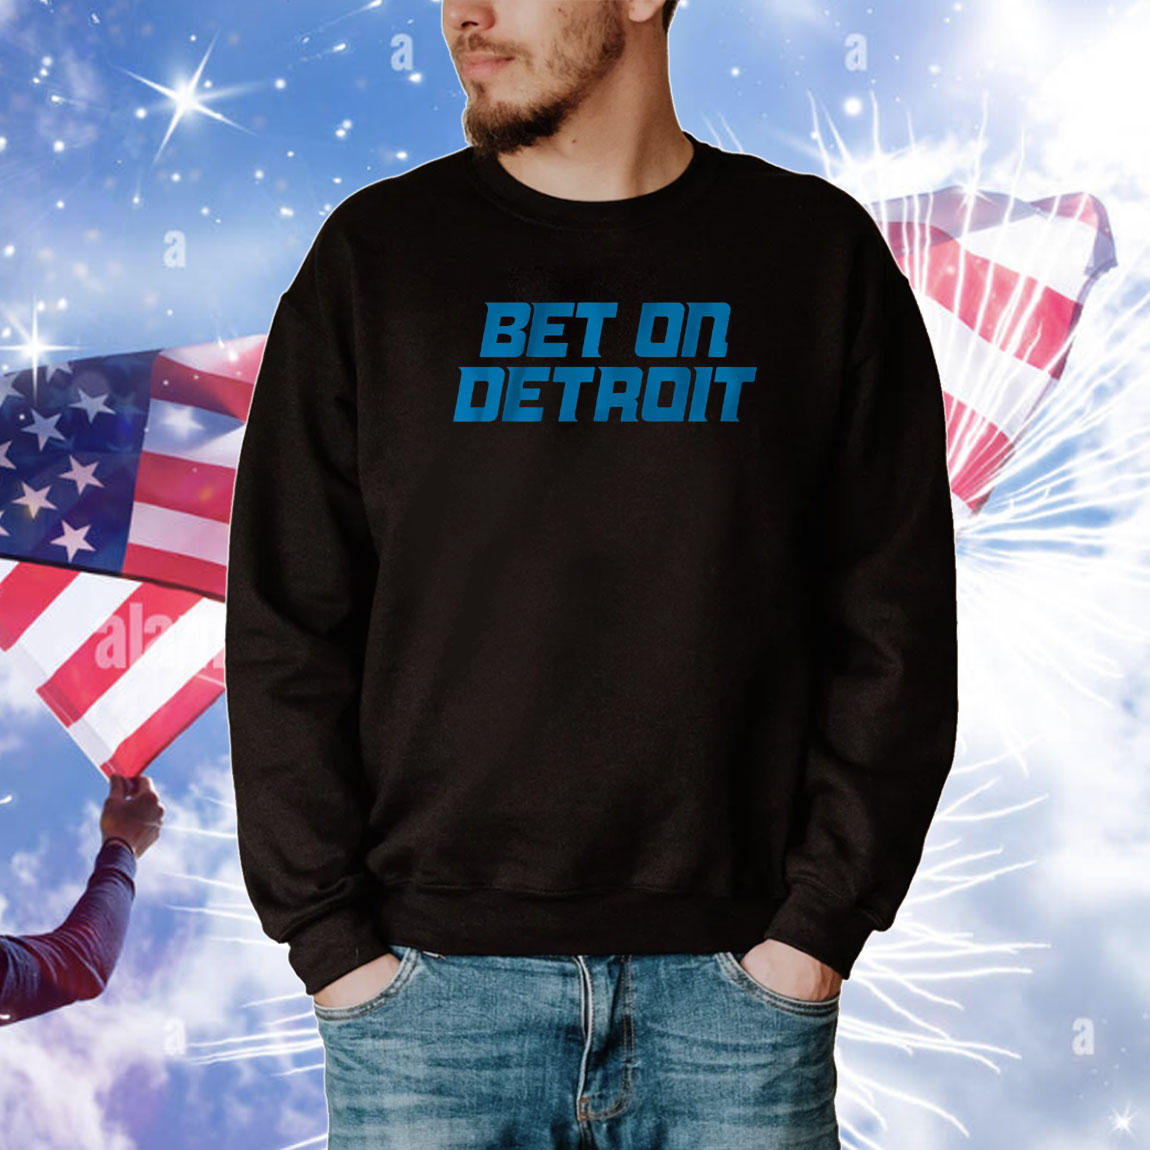 Bet On Detroit Tee Shirts